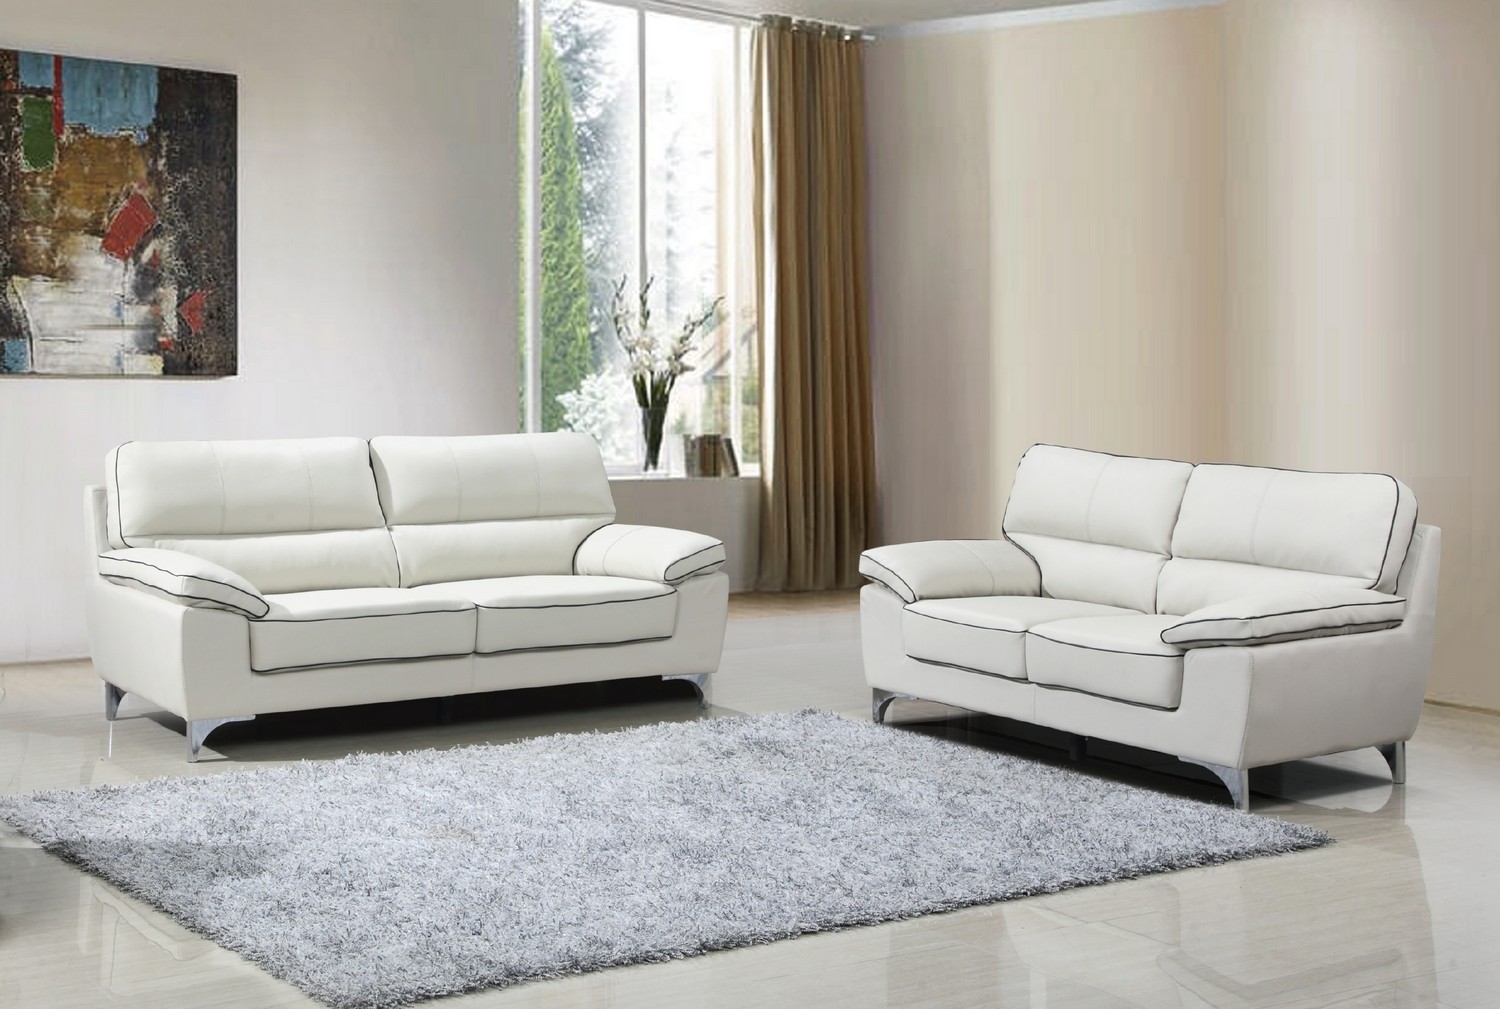 64'' X 36'' X 37'' Modern Light Gray Leather Sofa And Loveseat